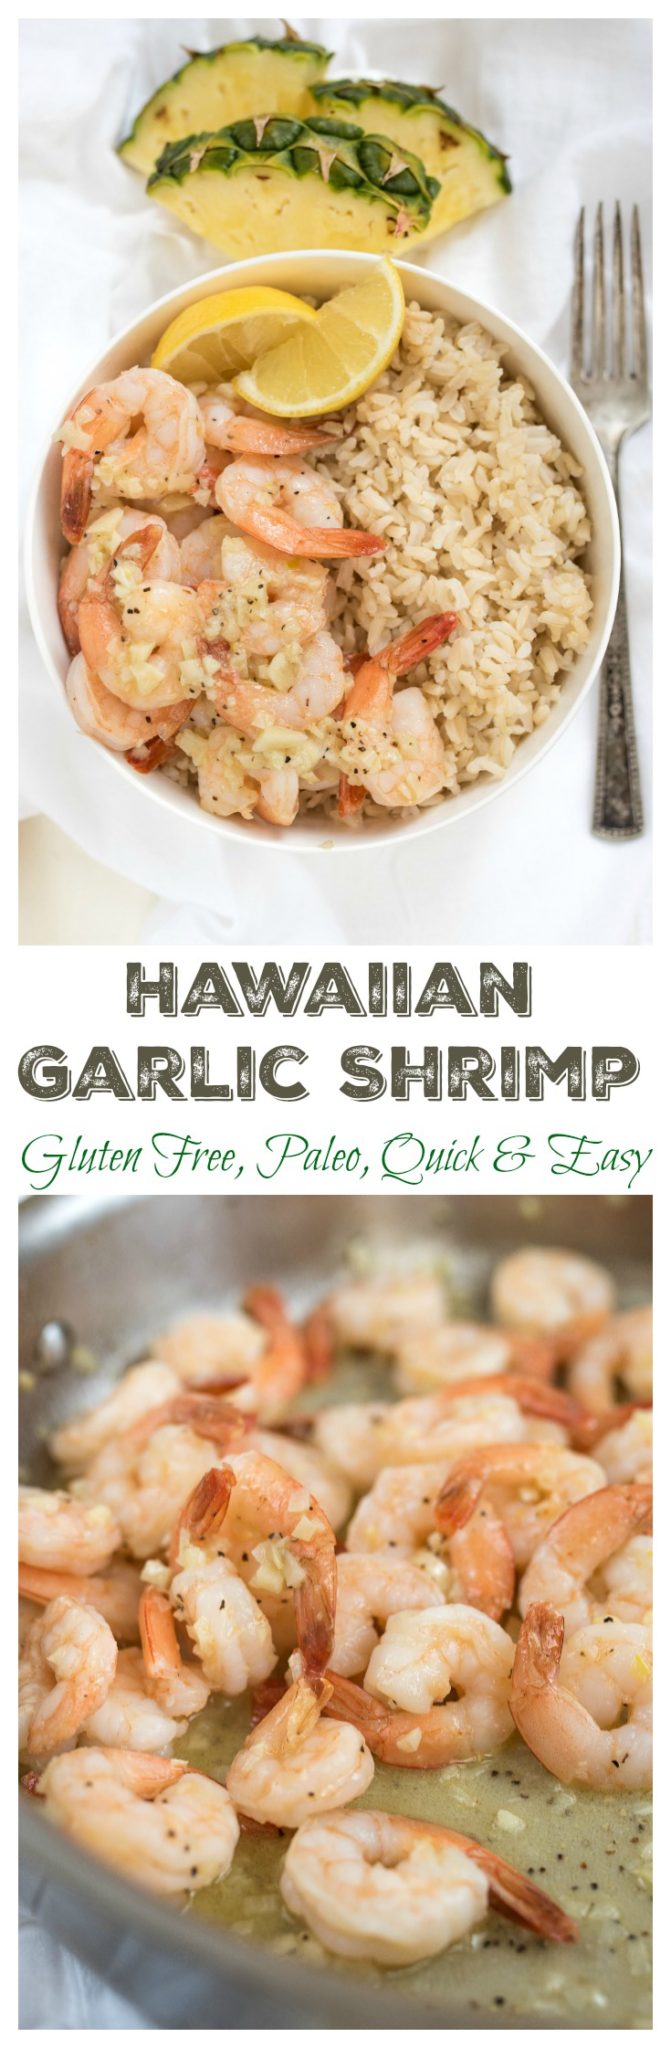 Hawaiian Garlic Shrimp- just like the garlic shrimp you'll find in Hawaii. Sweet buttery garlic sauce ready in under 20 minutes. #glutenfree | www.nutritiouseats.com